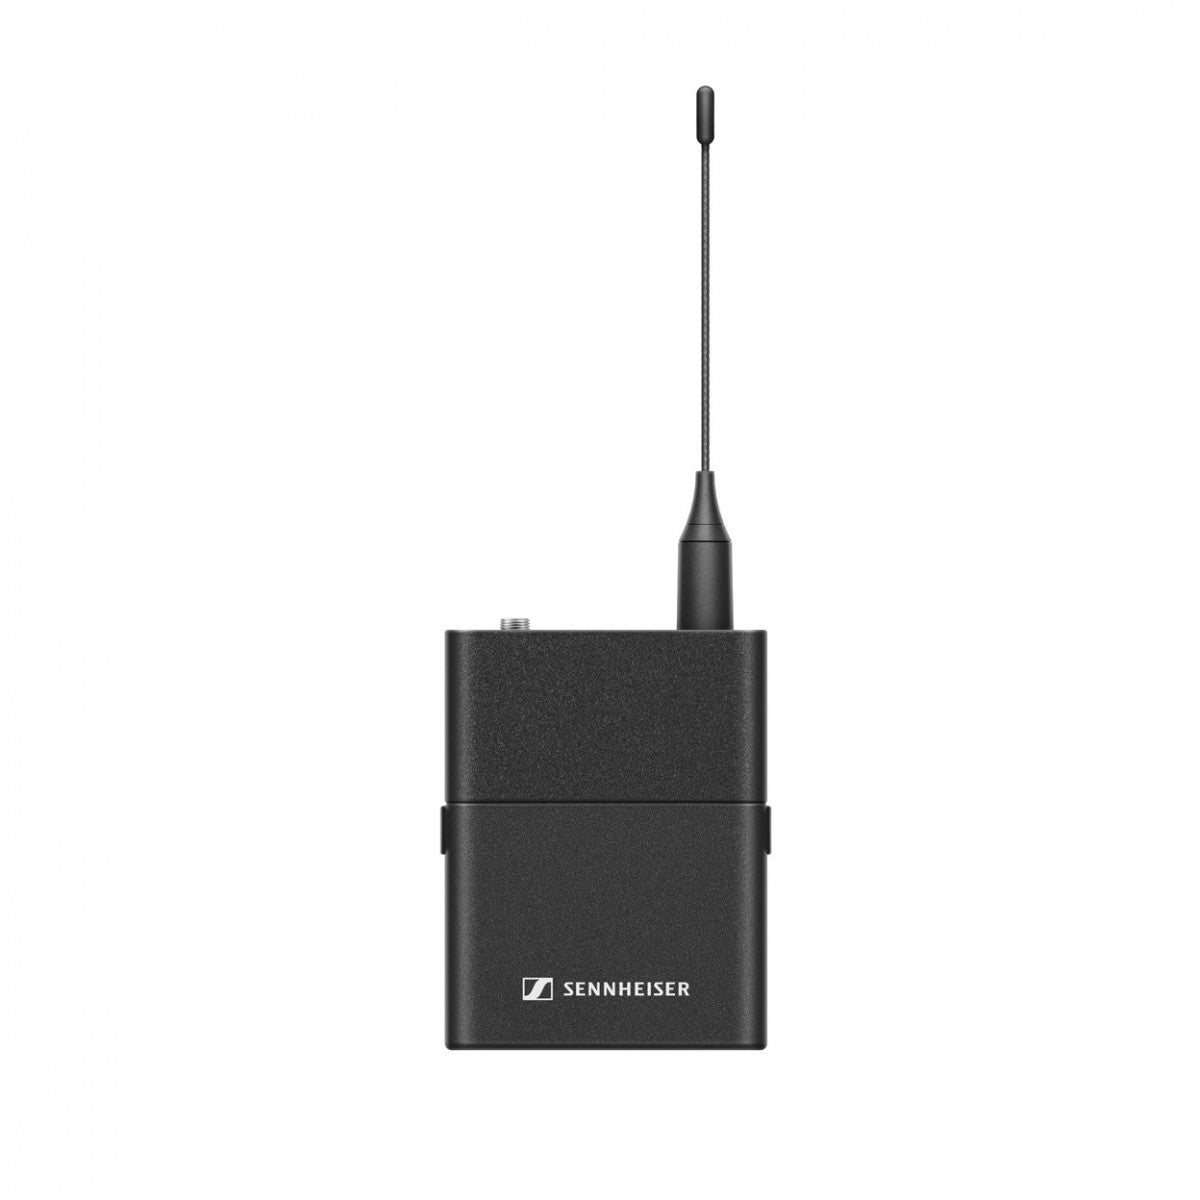 Sennheiser Evolution EW-D ME2 SET Wireless Digital Lavalier Set